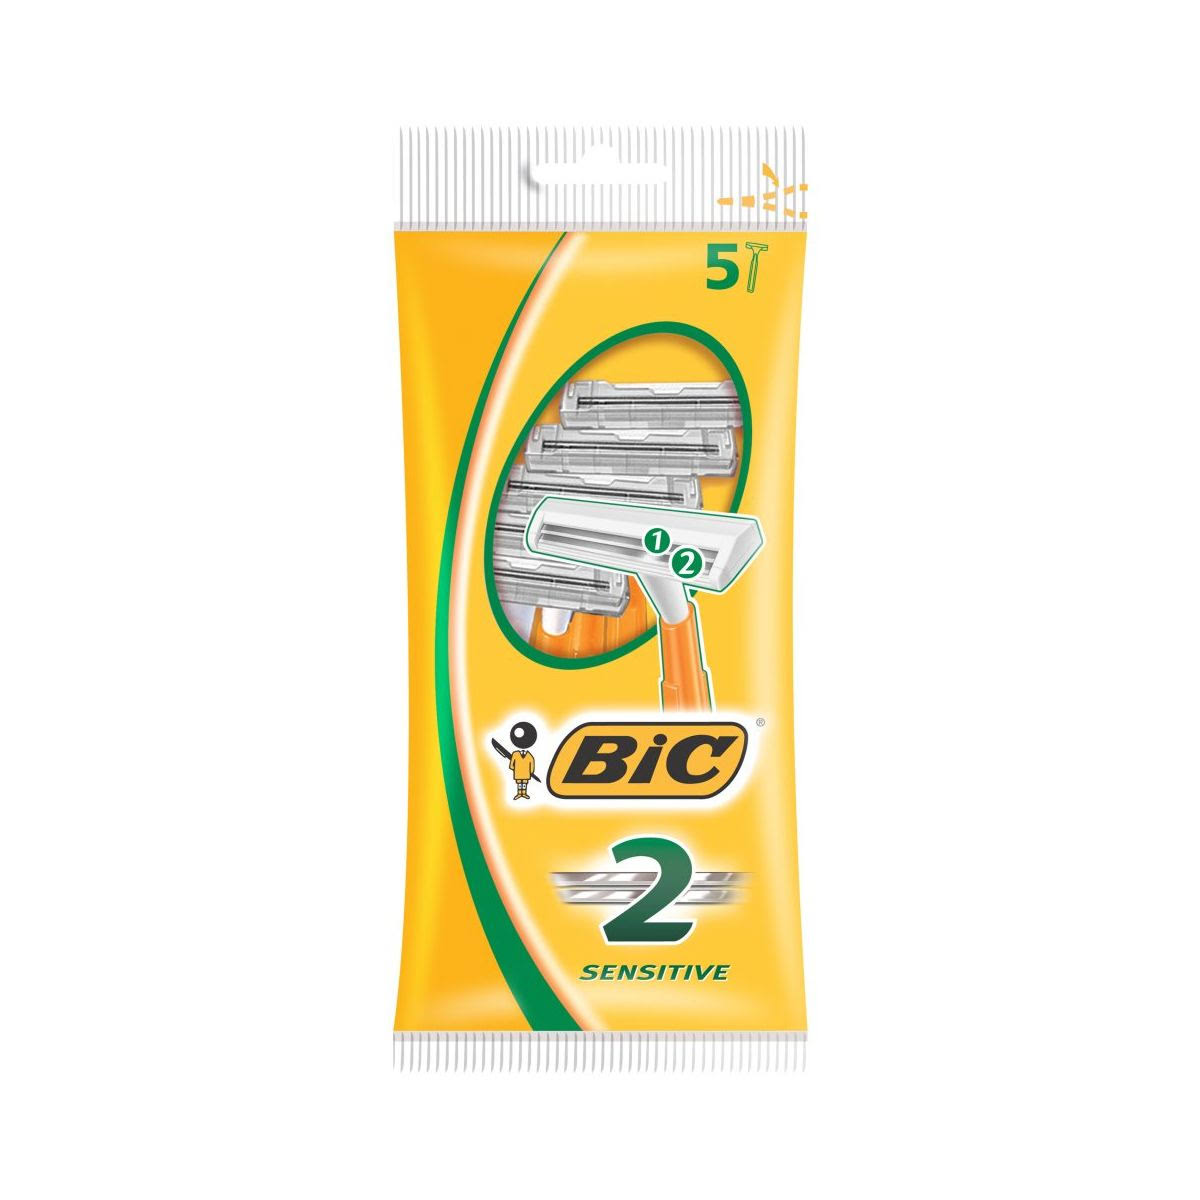 Bic 2 Sensitive Disposable Men's Razors - 5pk